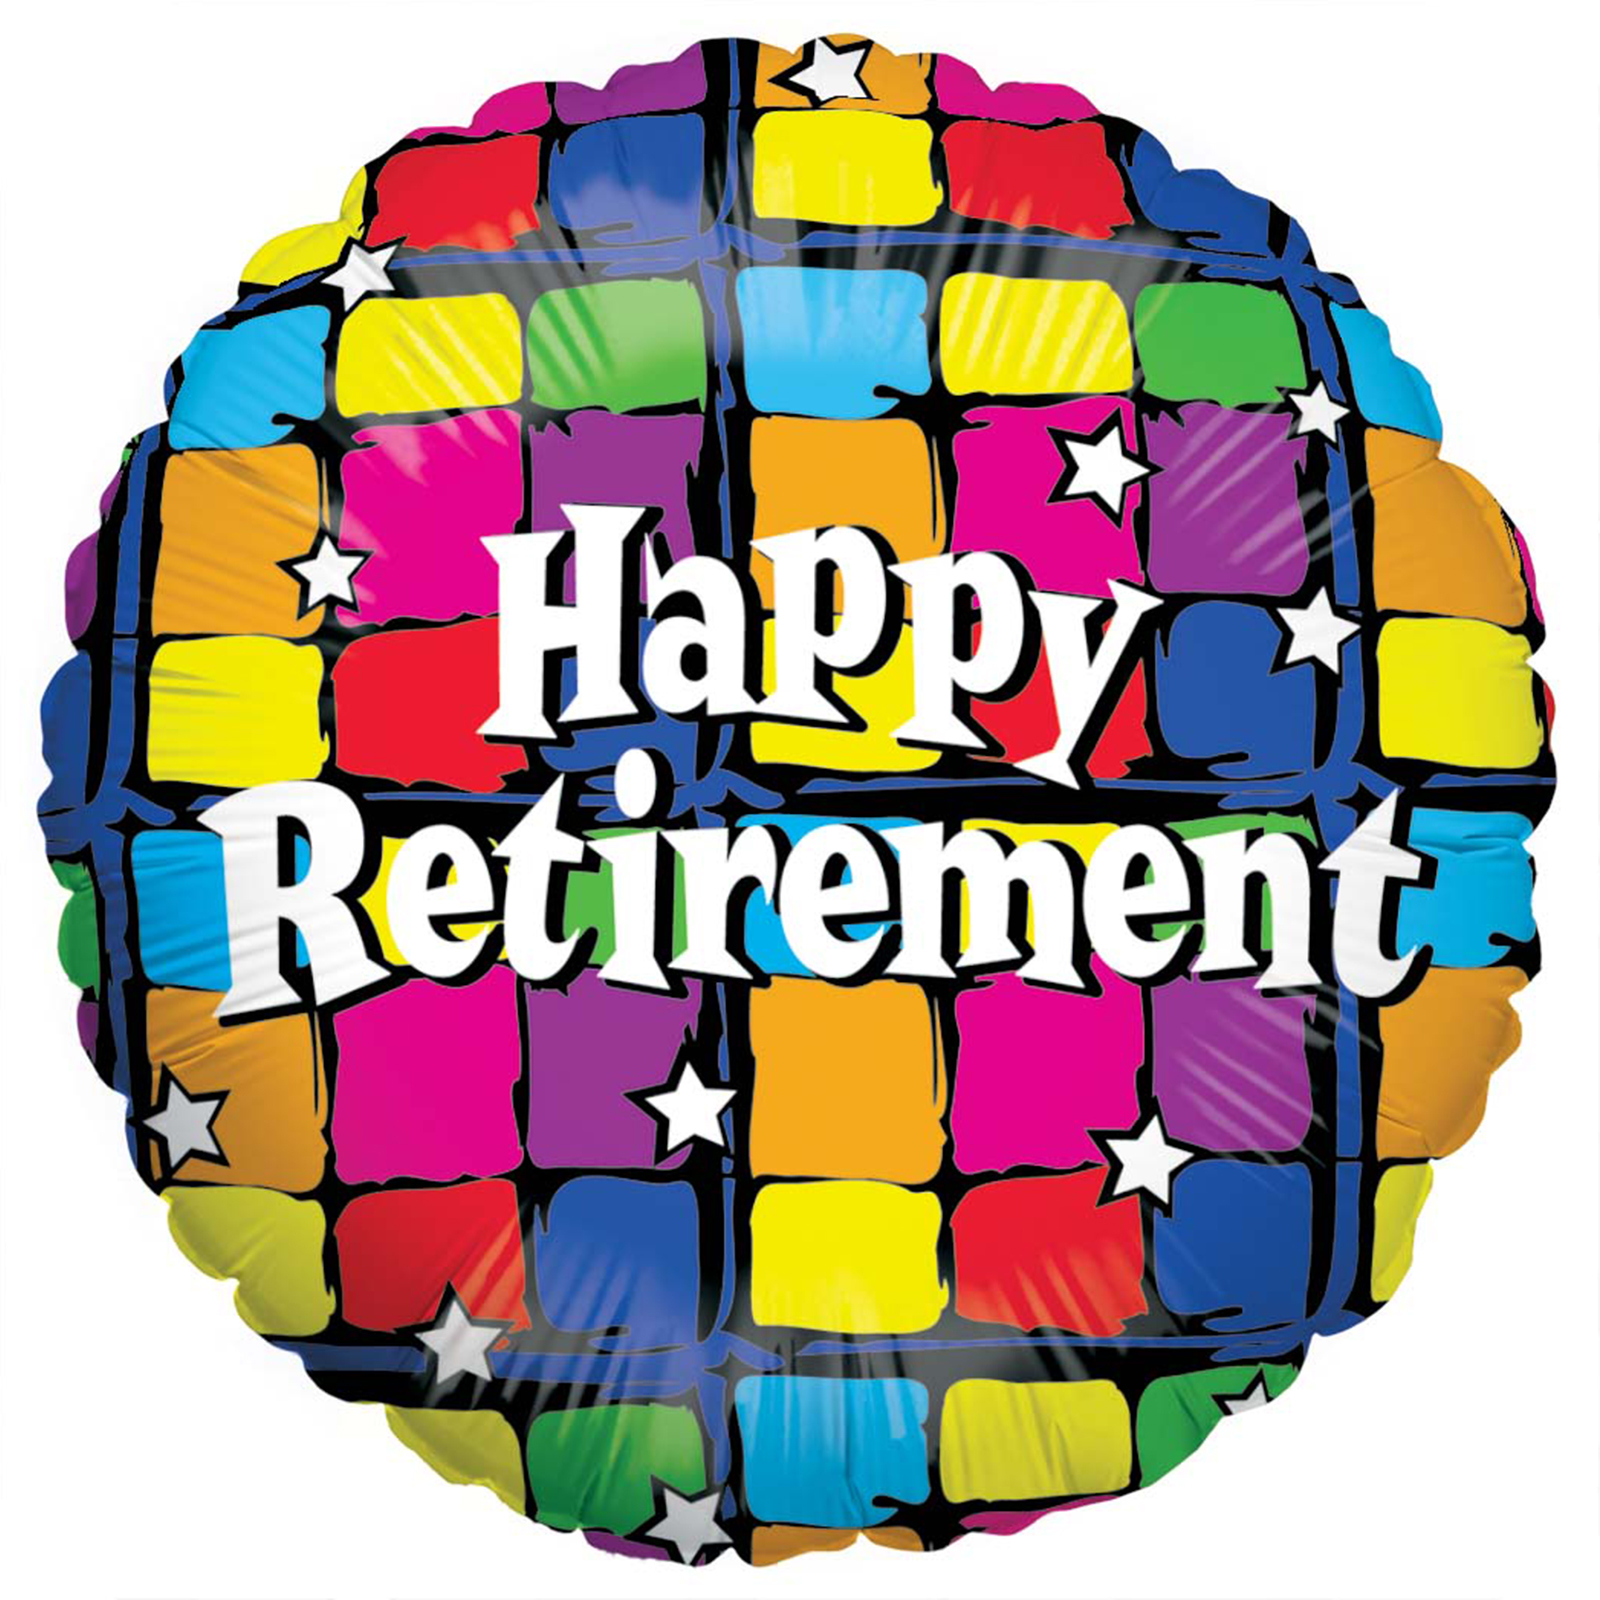 Retirement clipart 2 - Cliparting.com